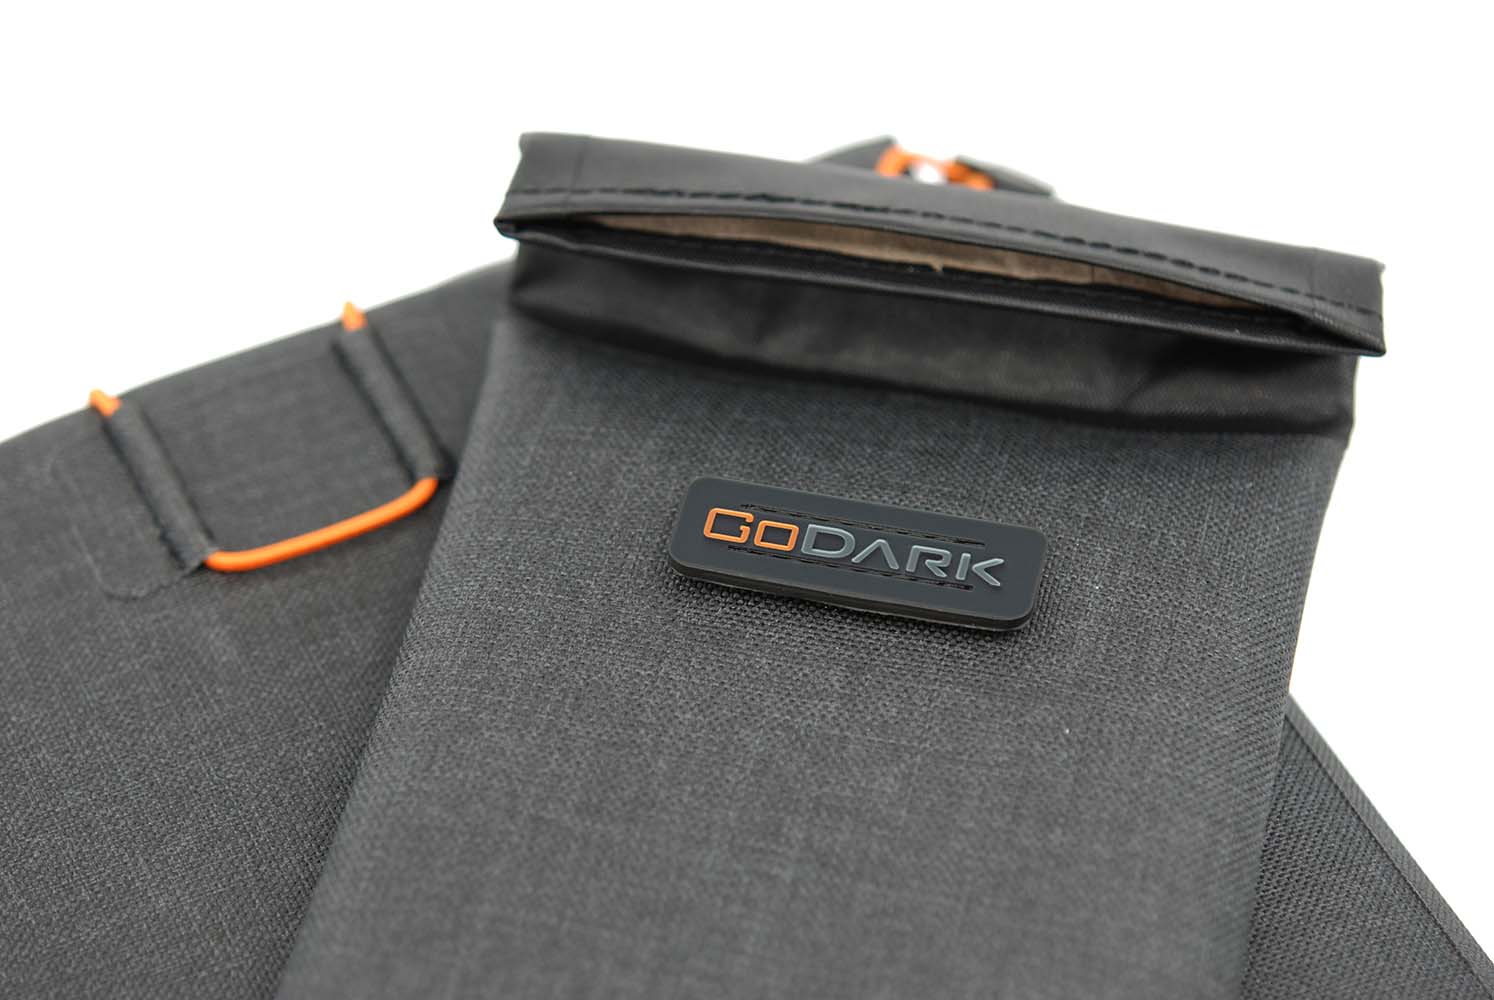 GoDark Faraday Bag for Tablets - The American Civil Defense Association